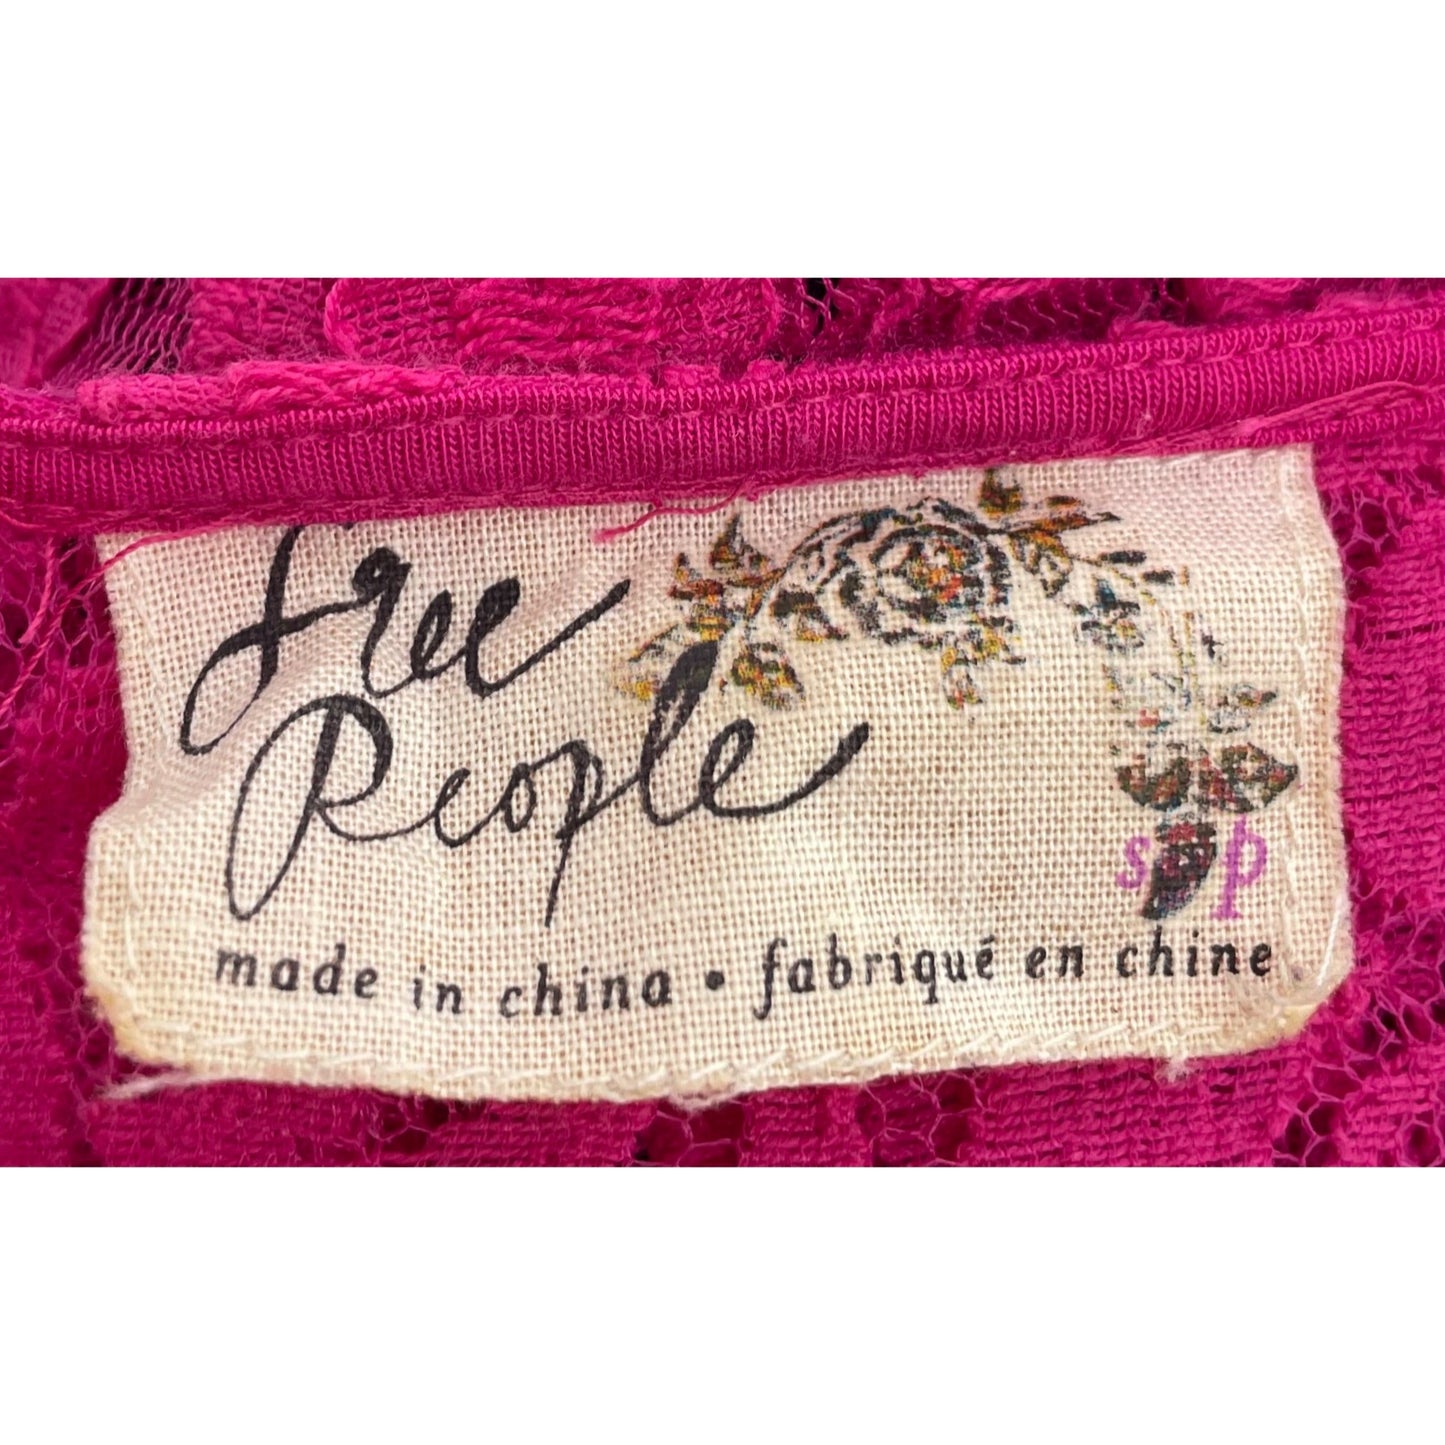 Free People Women's Size Small Sleeveless Fuchsia Floral Lace Dress